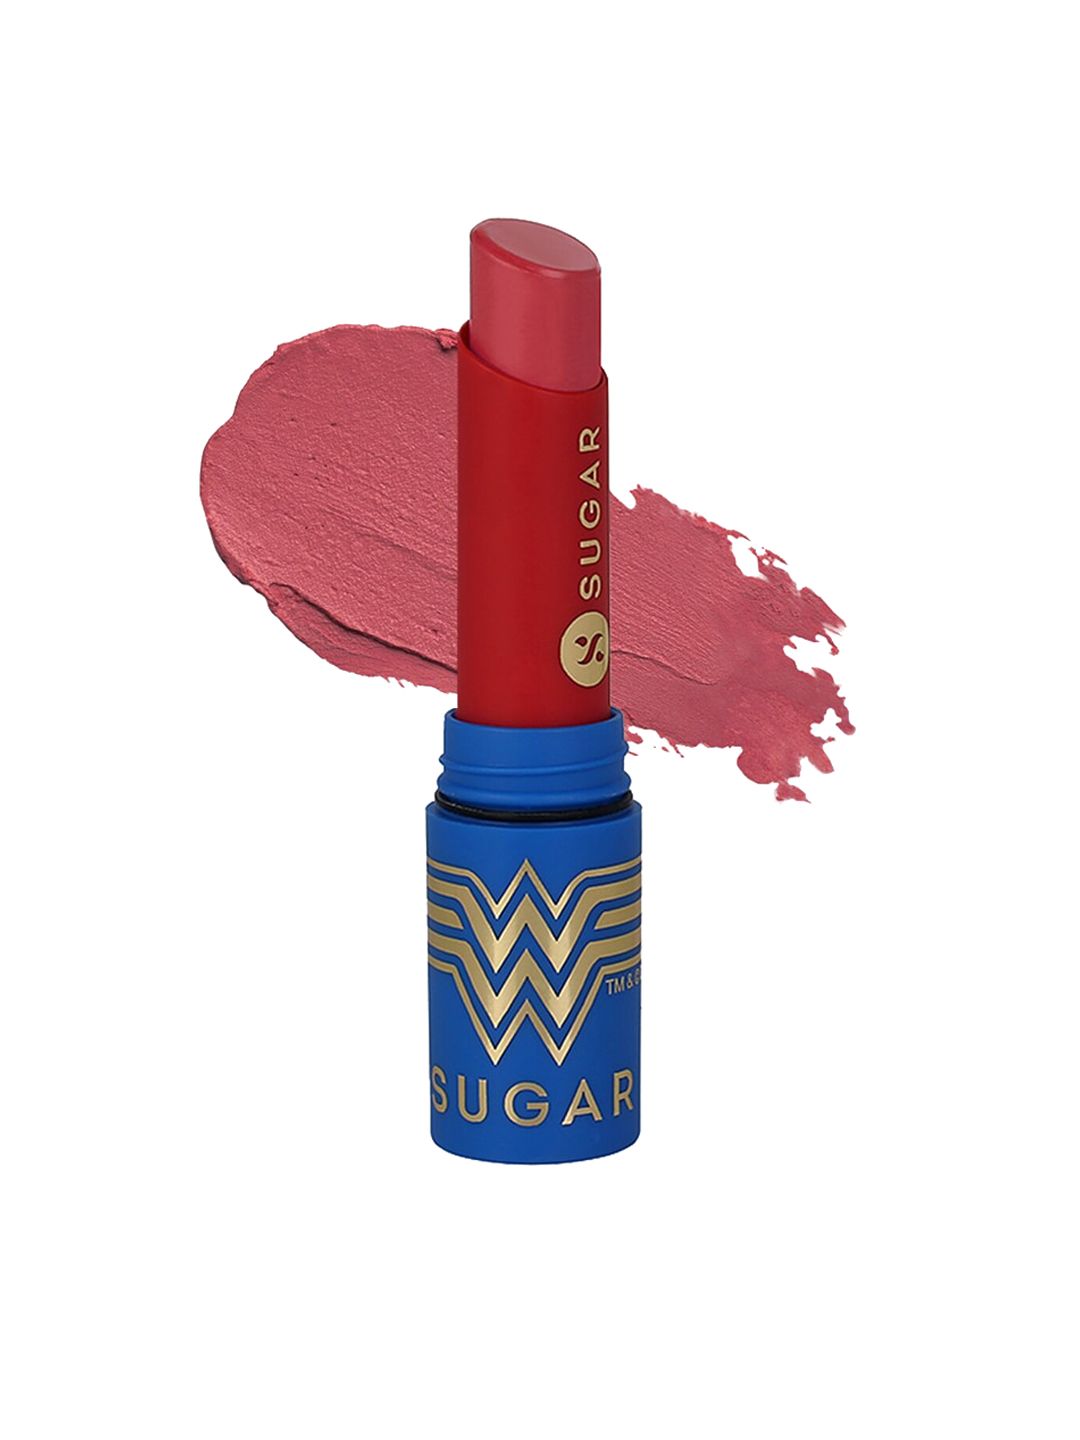 SUGAR X Wonder Woman Everlasting Matte Lipstick - 04 Power Price in India